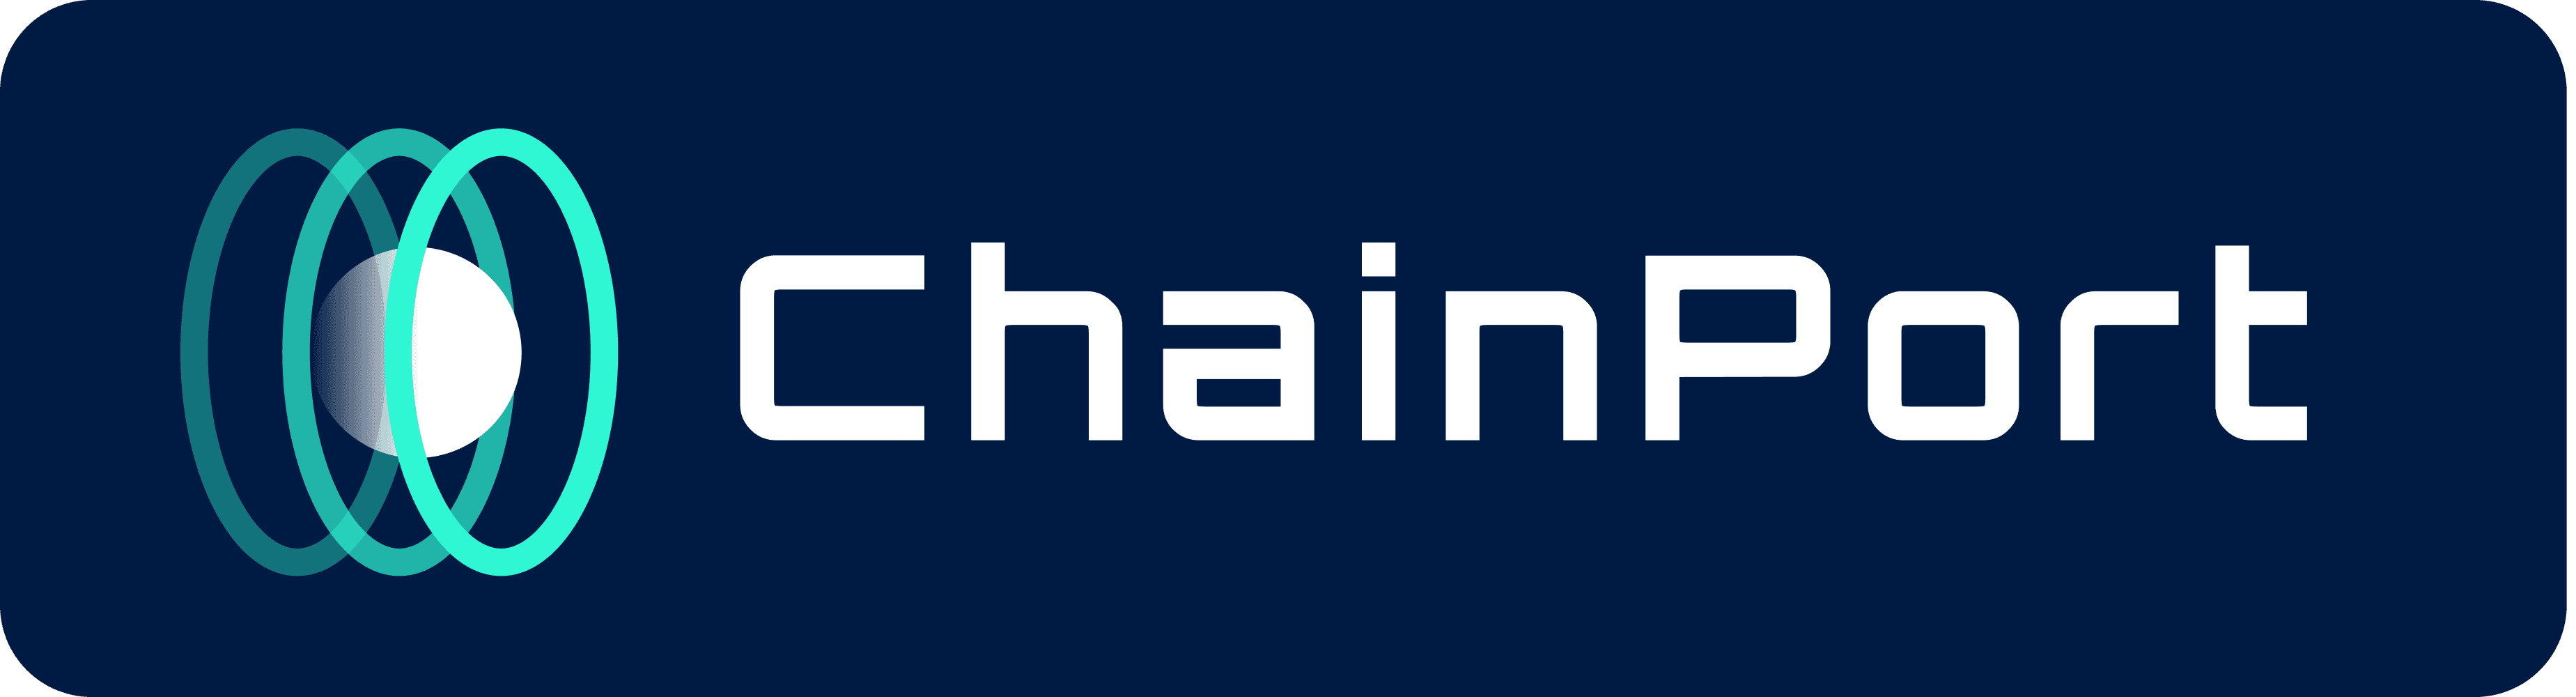 Chainport_logo_horizontal_1.png